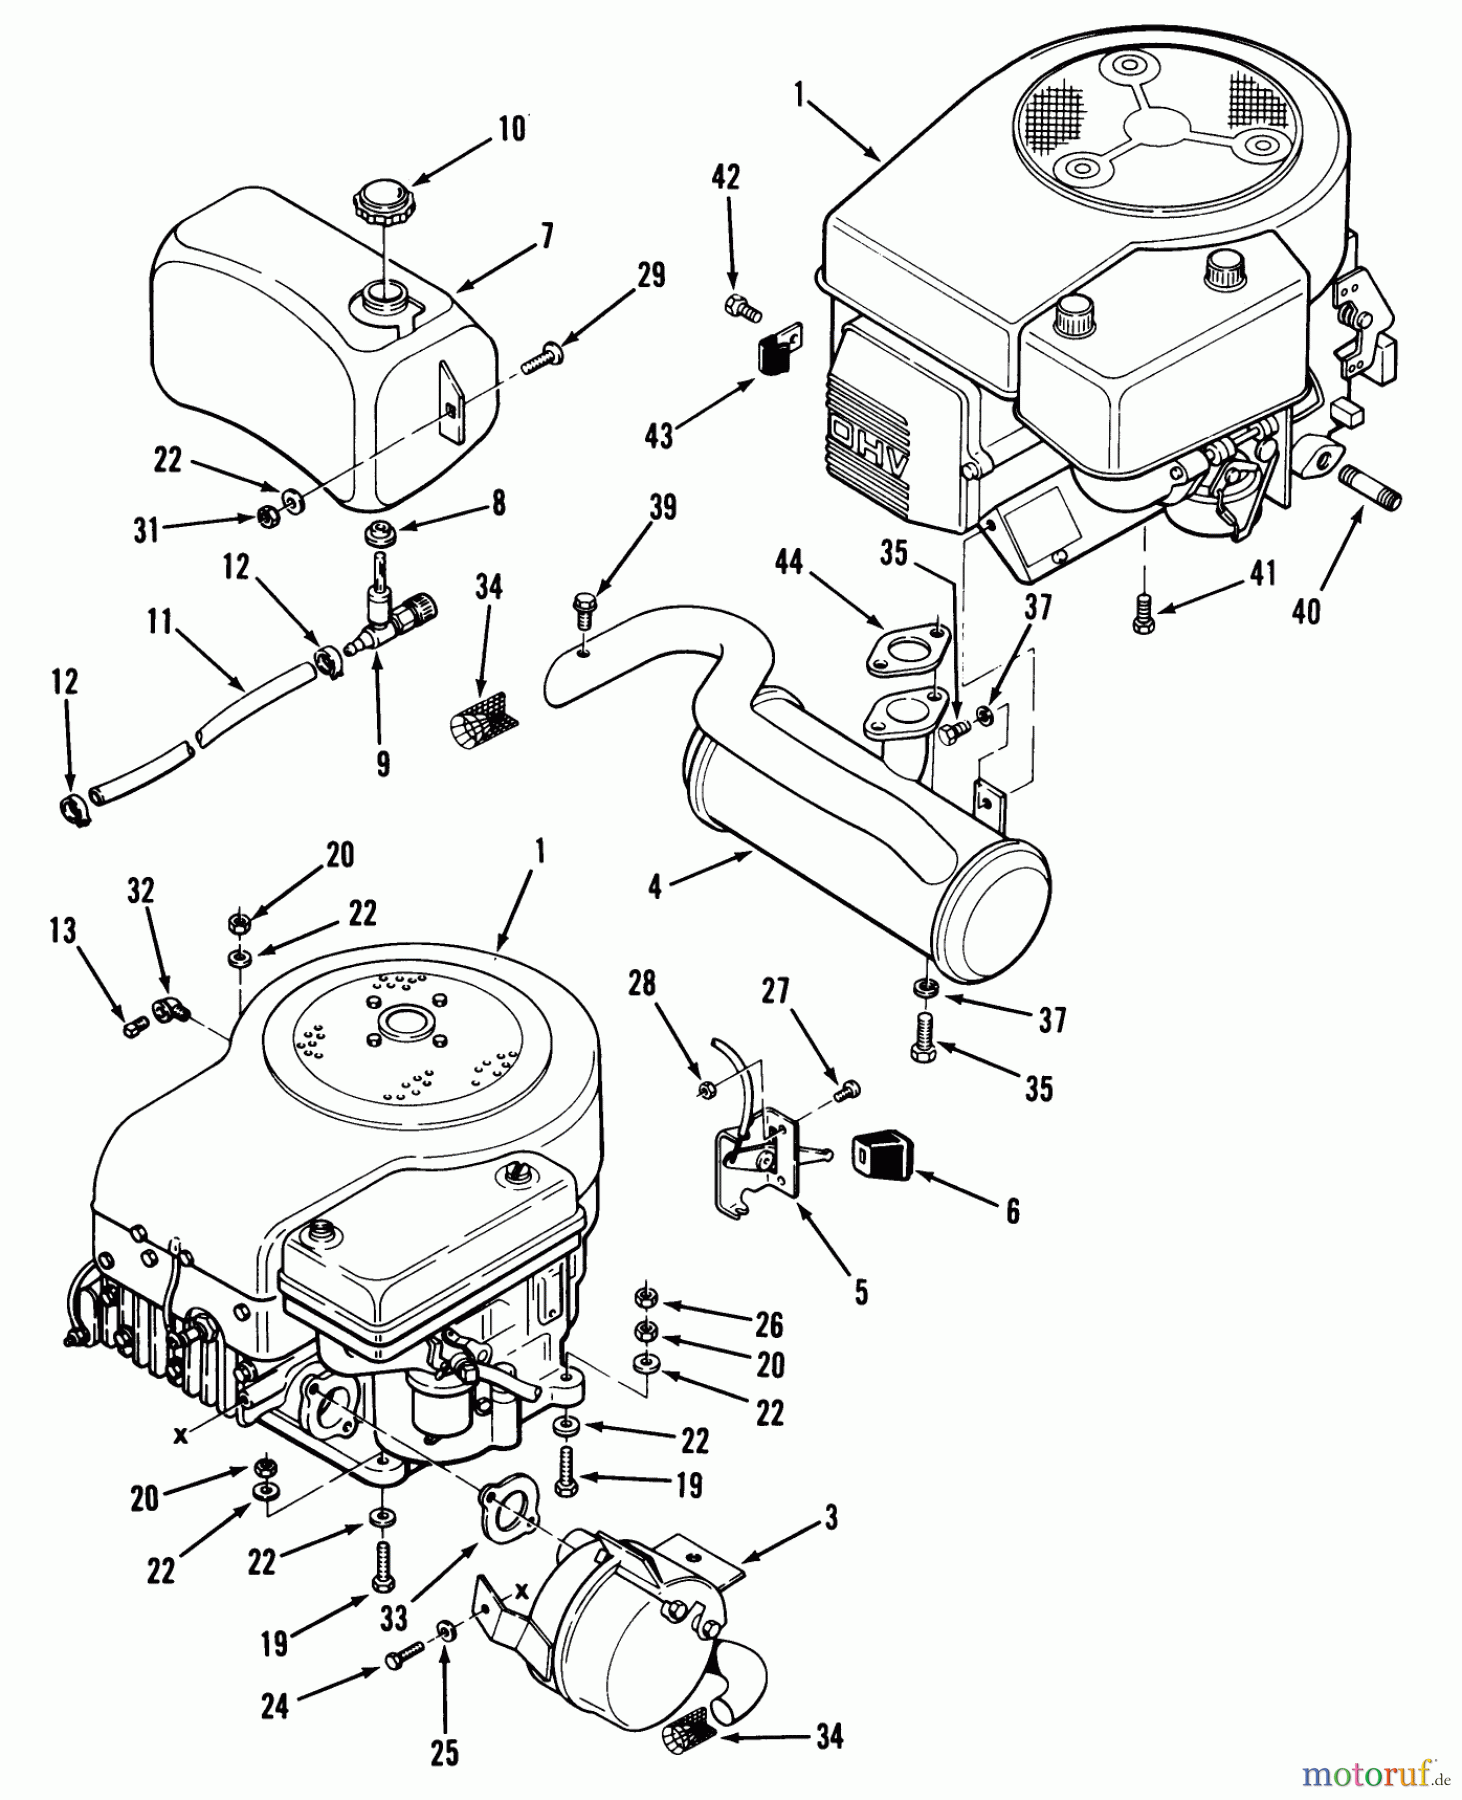  Toro Neu Mowers, Lawn & Garden Tractor Seite 1 32-12O501 (212-5) - Toro 212-5 Tractor, 1990 ENGINE, FUEL & EXHAUST SYSTEMS